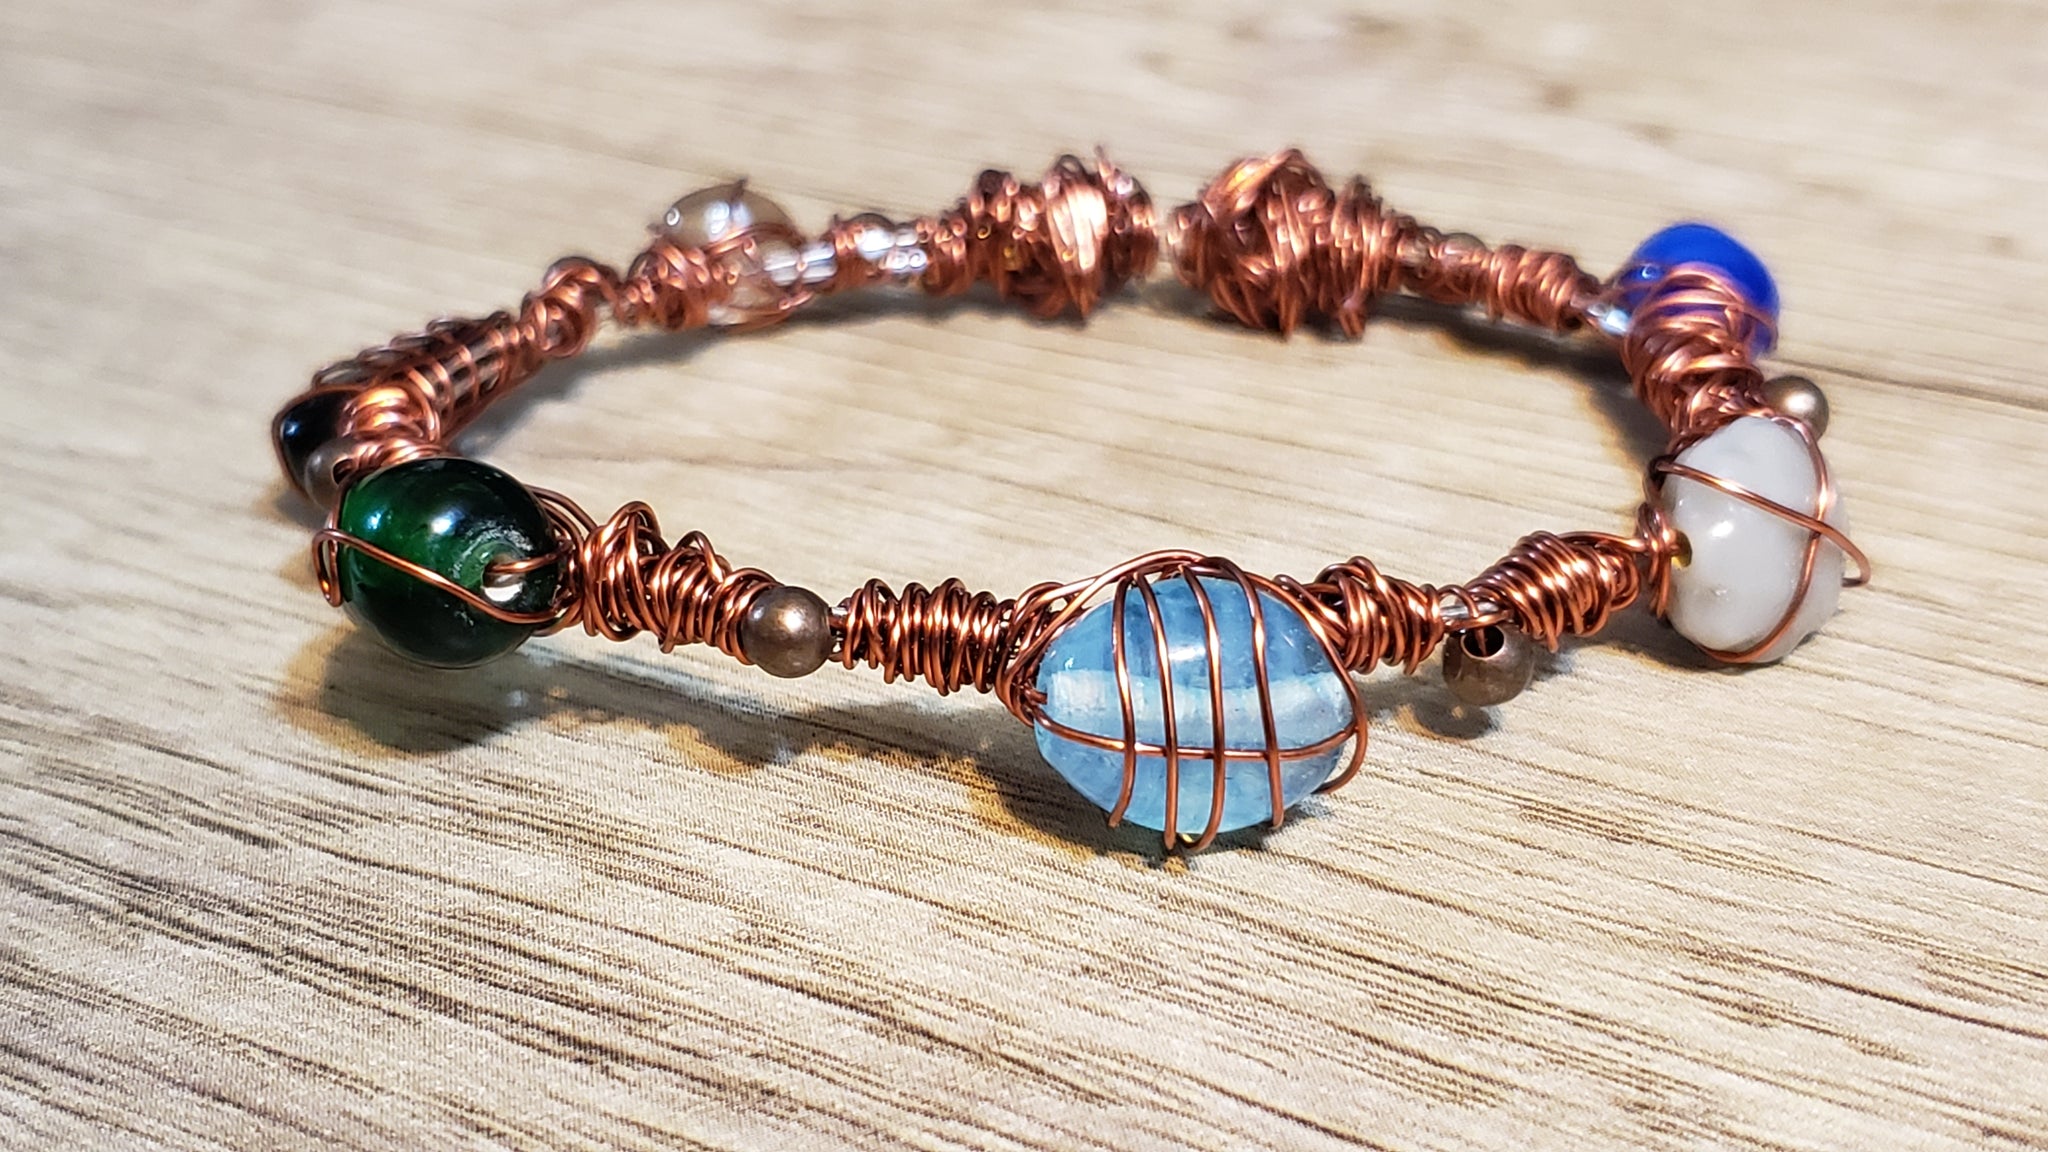 Crazy Lace Agate Gemstone Copper Handmade Wire Jewelry Adjustable Bracelet  Cuff | eBay